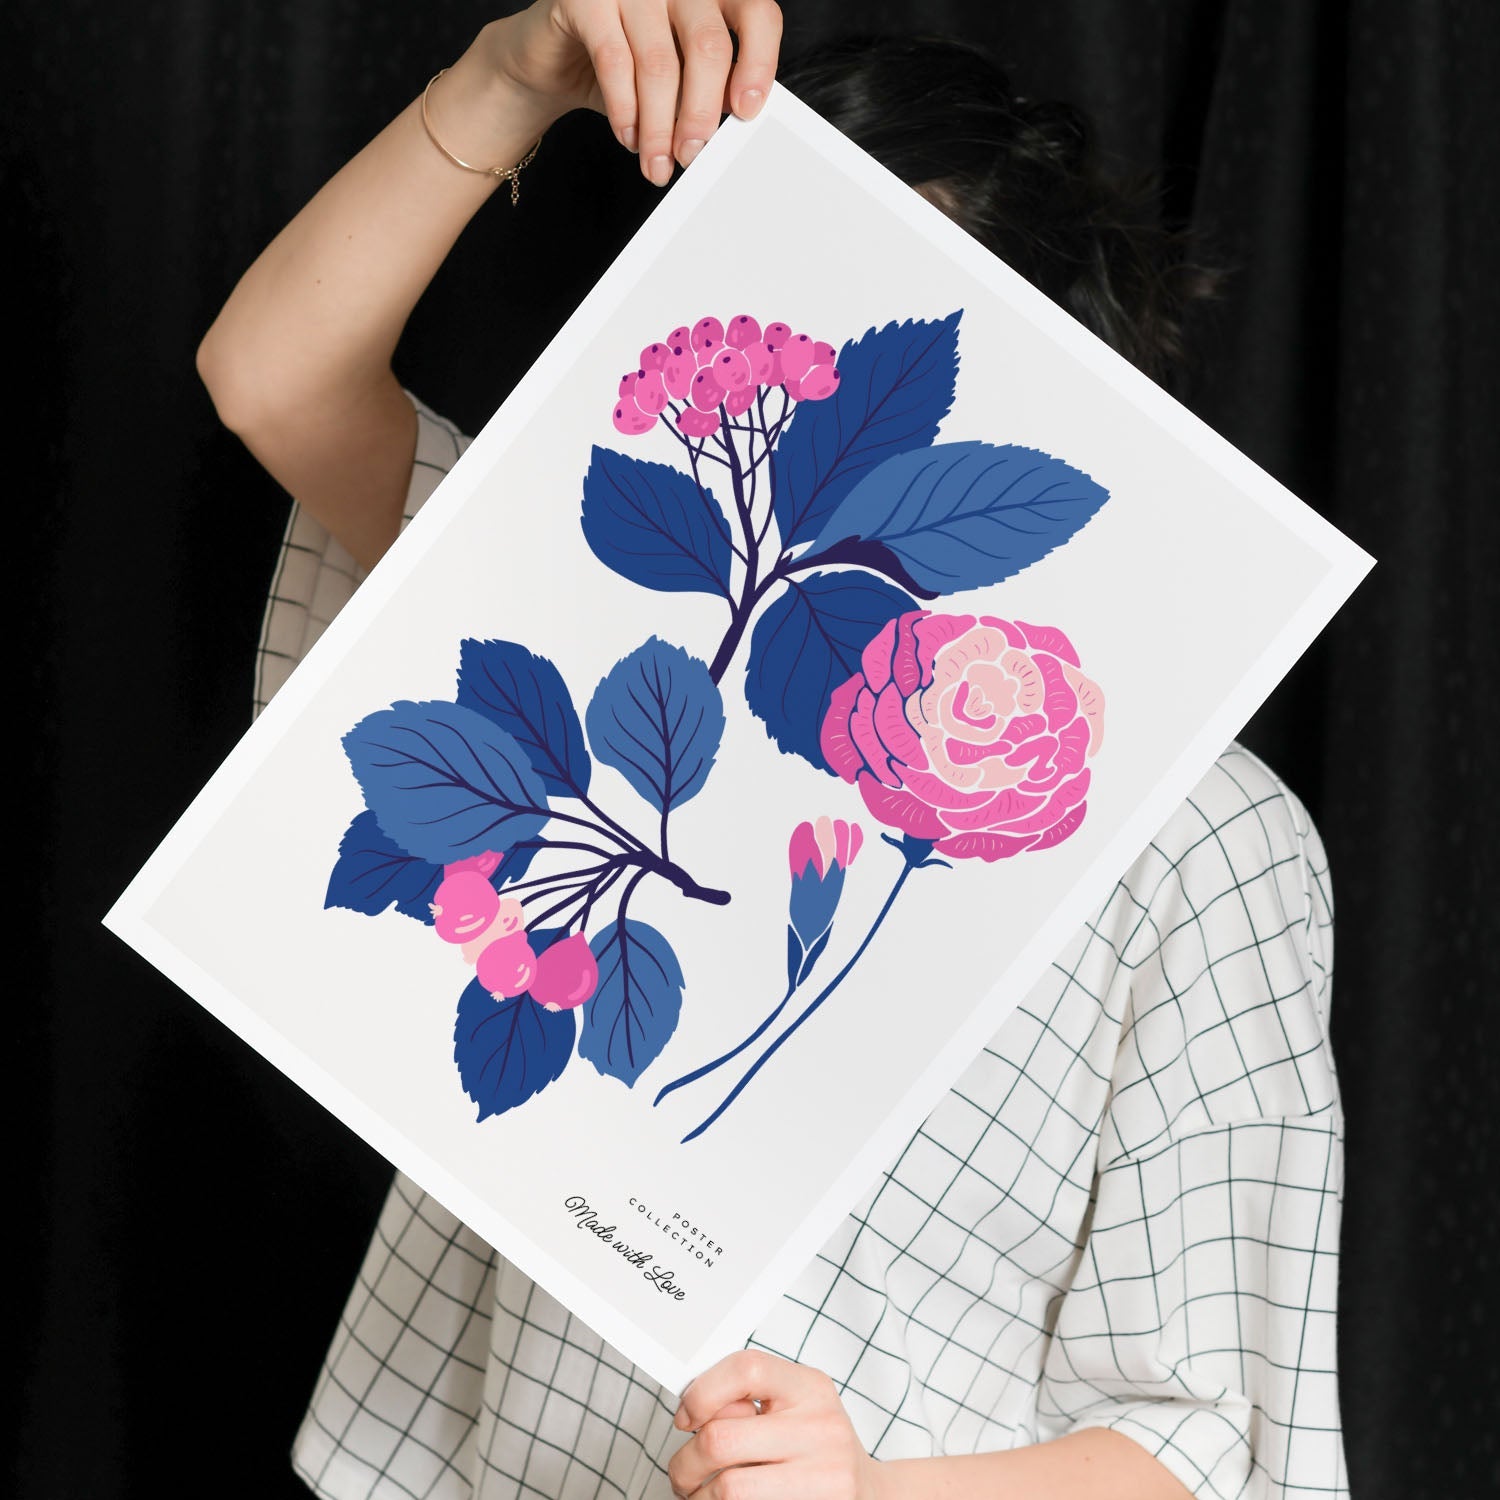 Pink Flowers Blue Leaves-Artwork-Nacnic-Nacnic Estudio SL